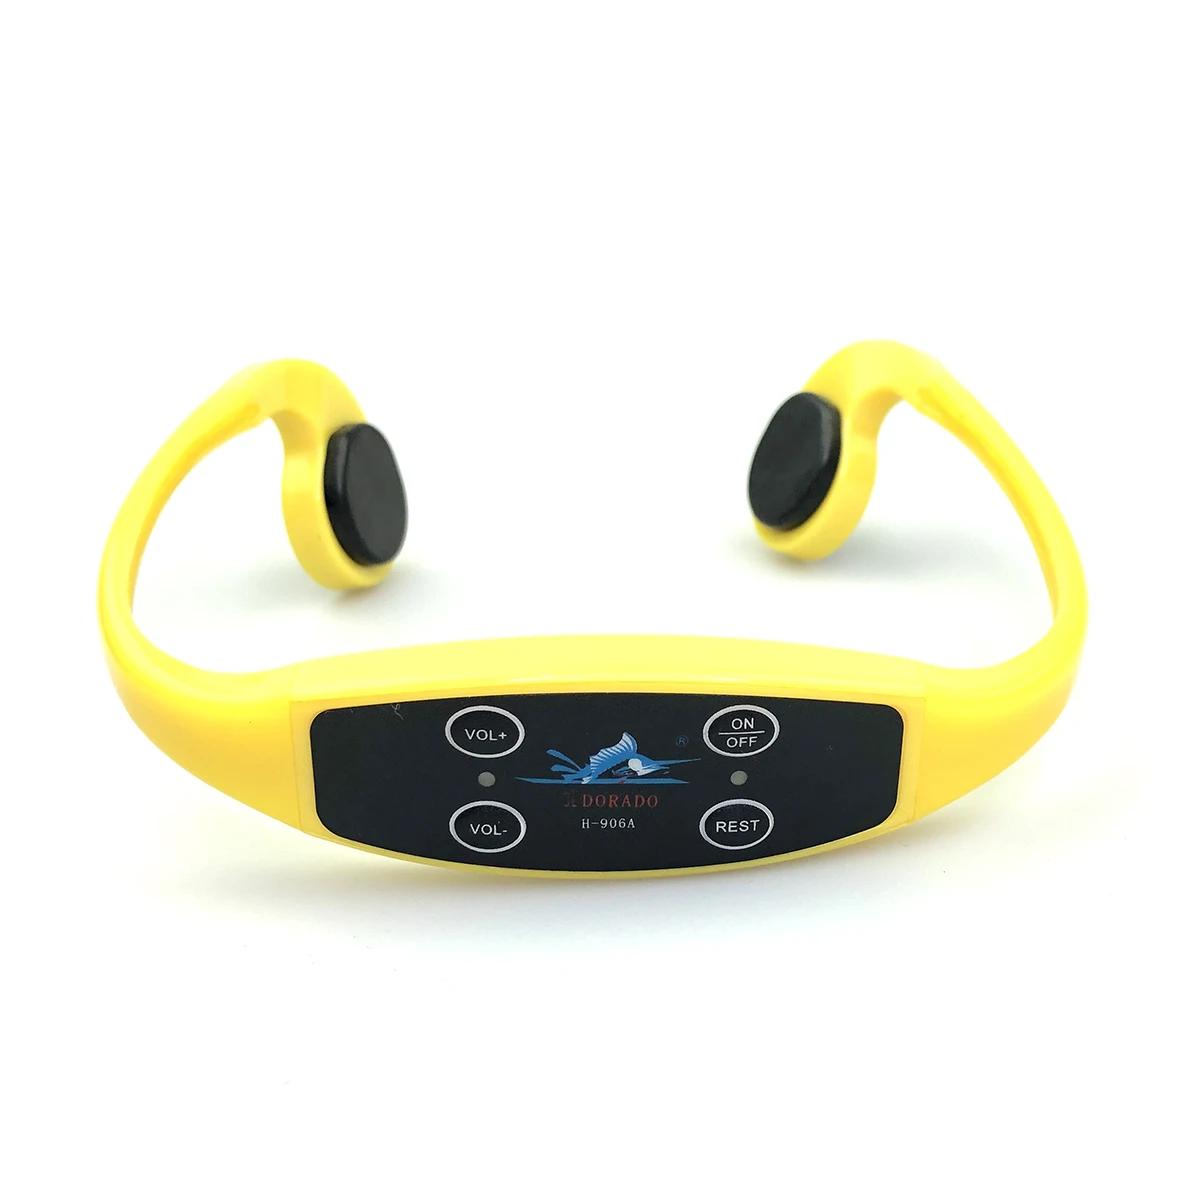 

Bone Conduction Swimming Teaching Aquatic Audio Training Fm Transfers H-904 Swim Coaching Headphone